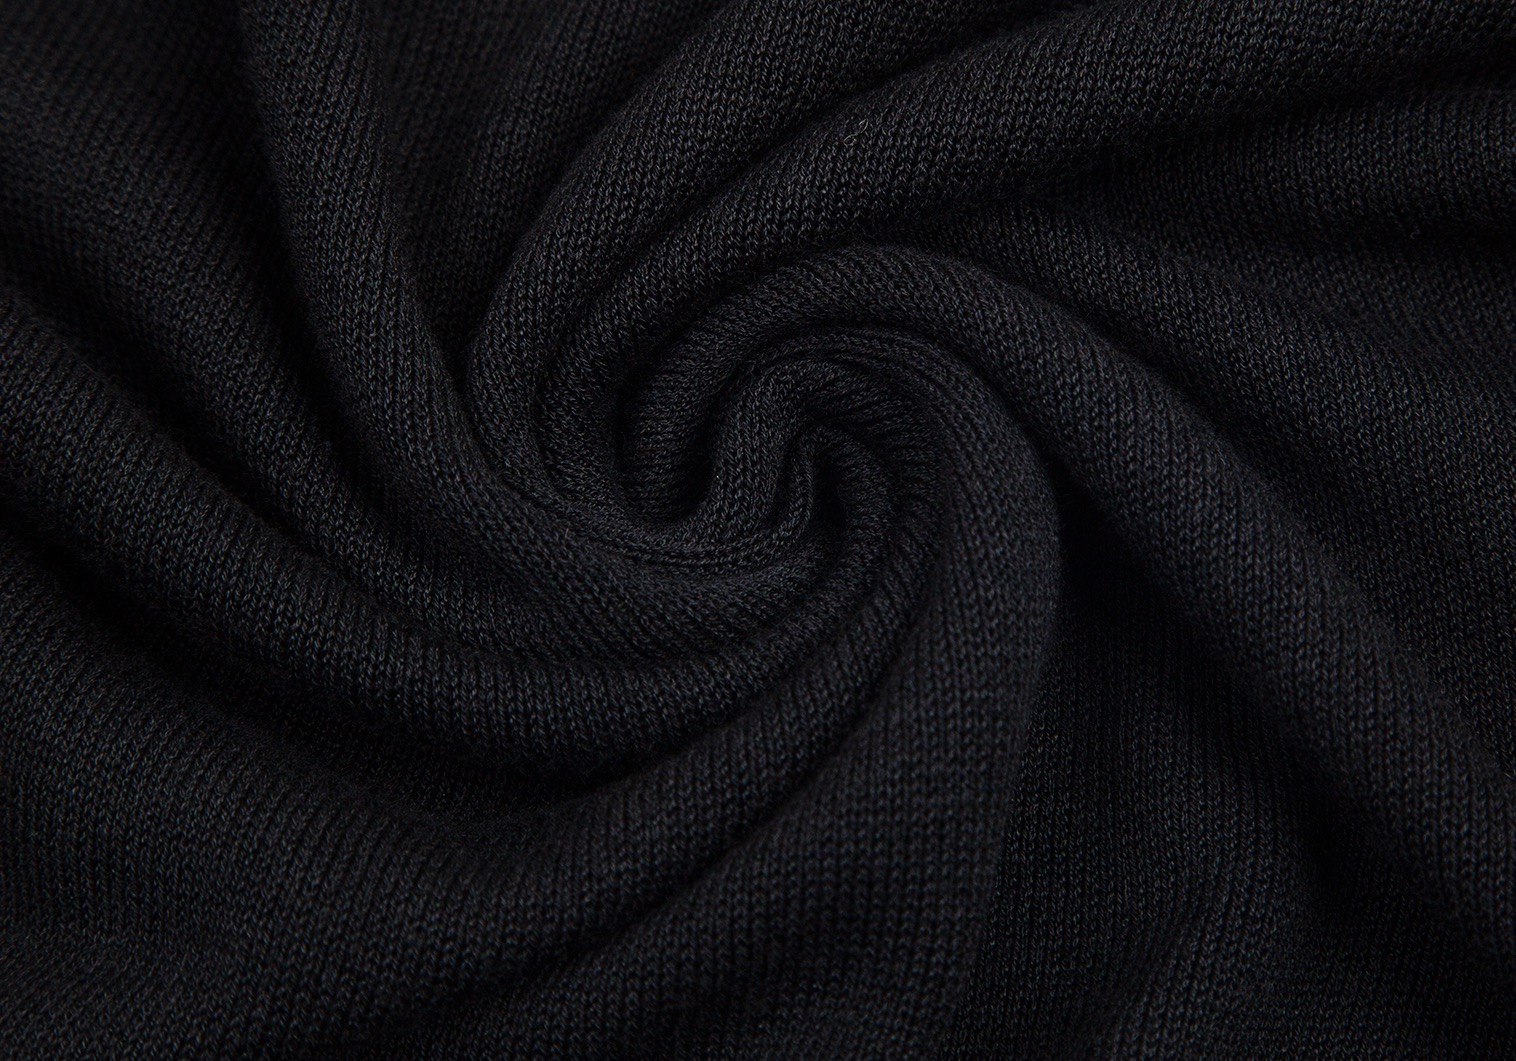 HANAE MORI Floral Jacquard Knit Top (Jumper) Black M | PLAYFUL